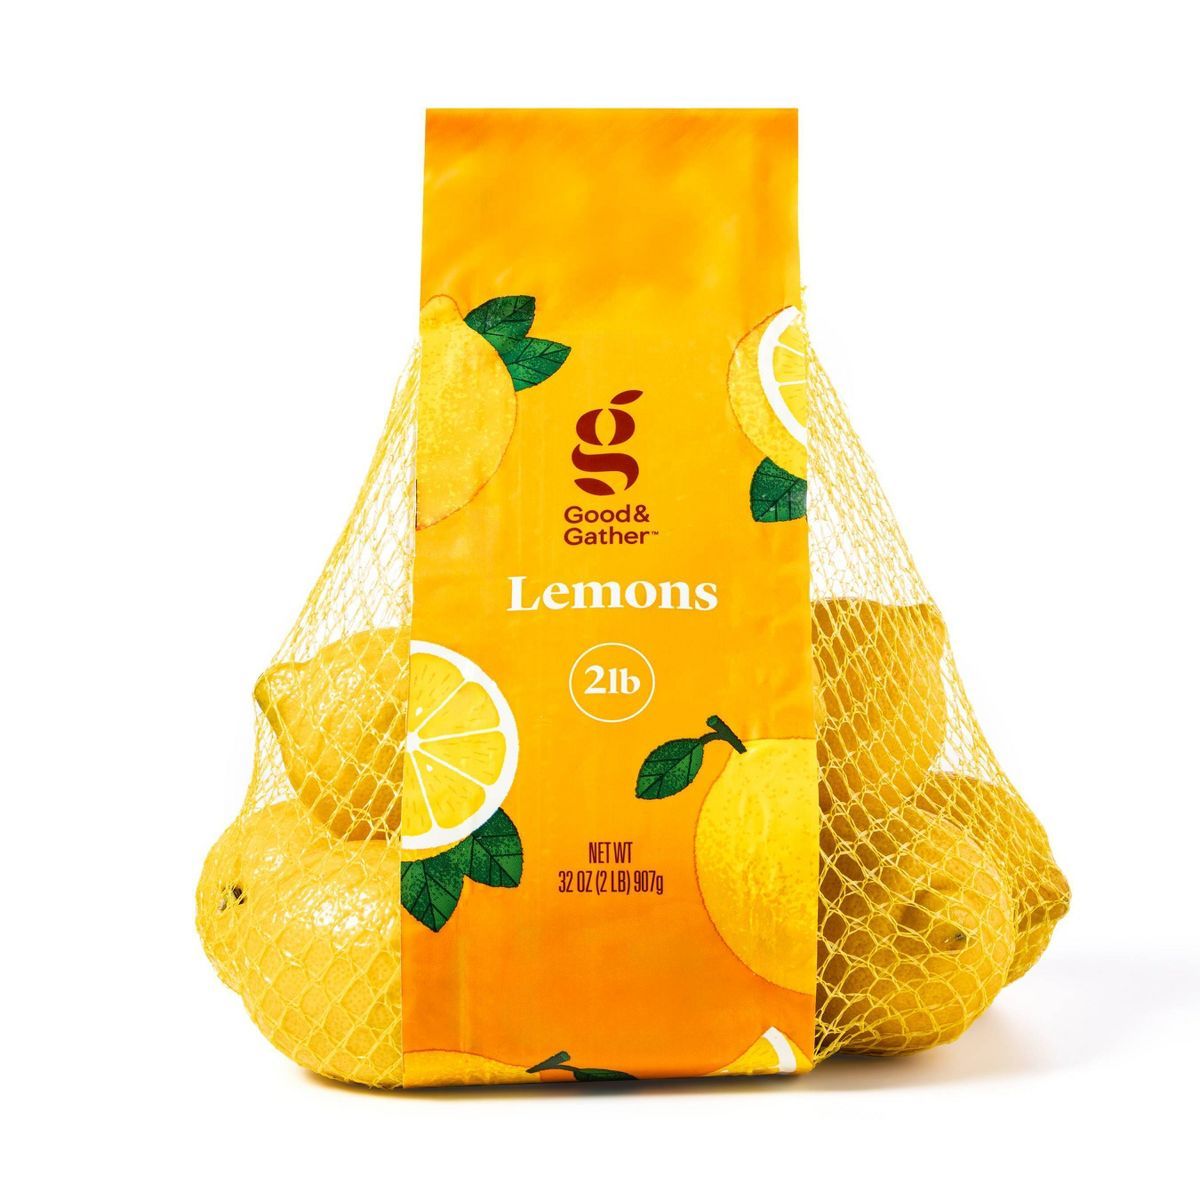 Lemons - 2lb Bag - Good & Gather™ | Target